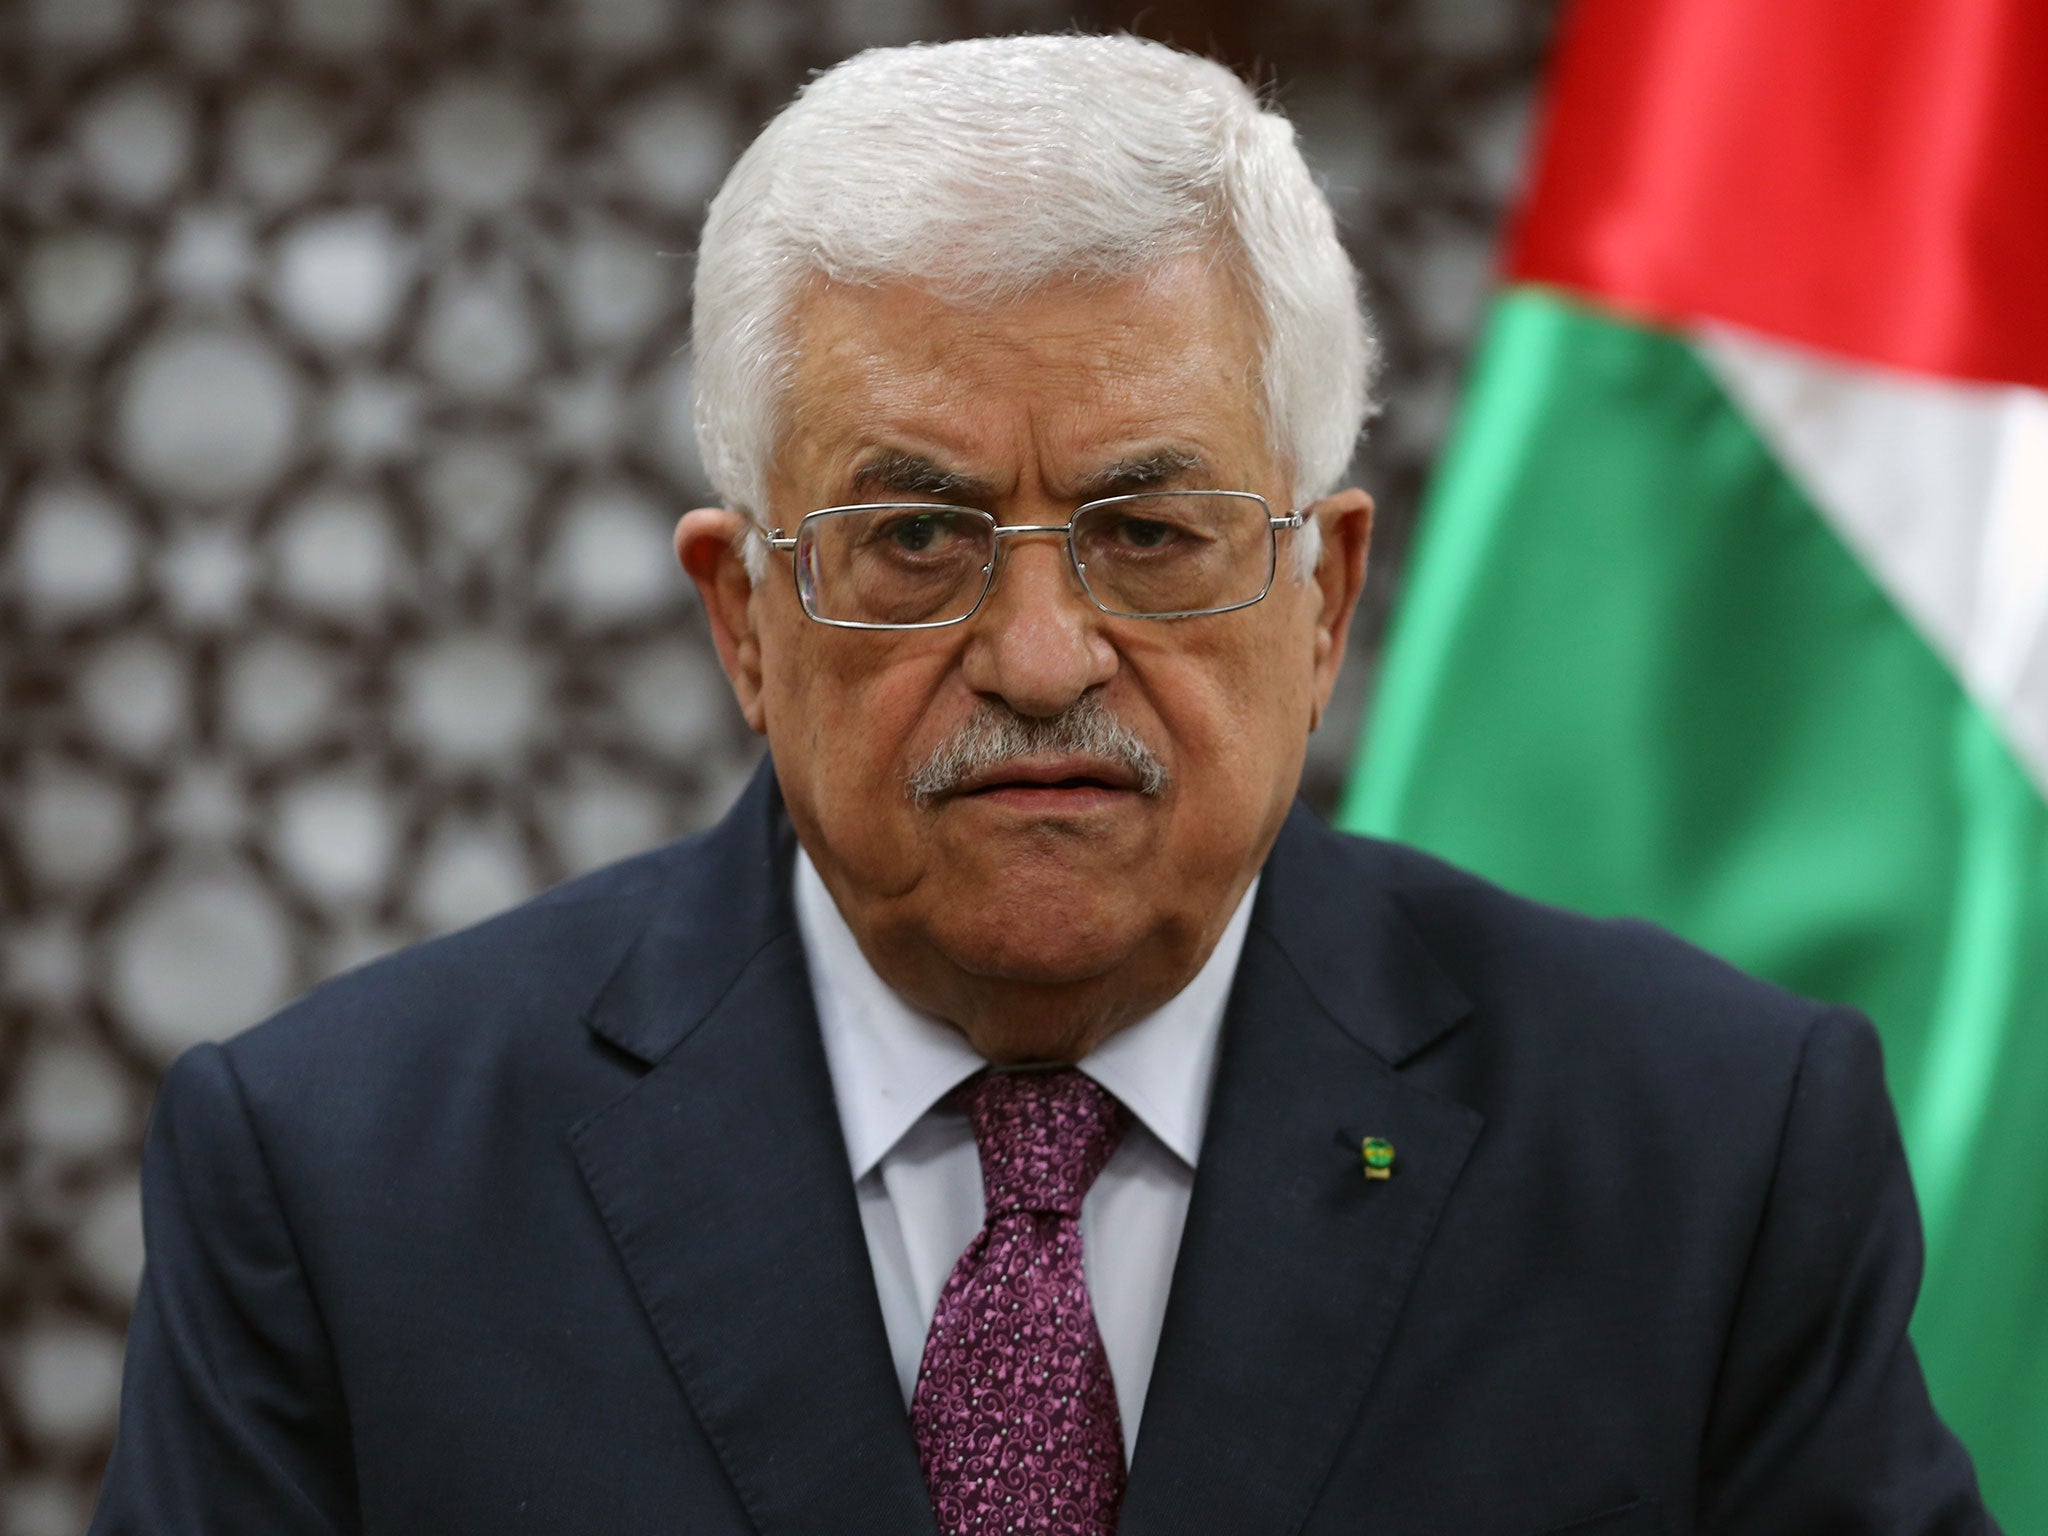 Mr Abbas has described the raising of the Palestinian flag as a 'landmark initiative'